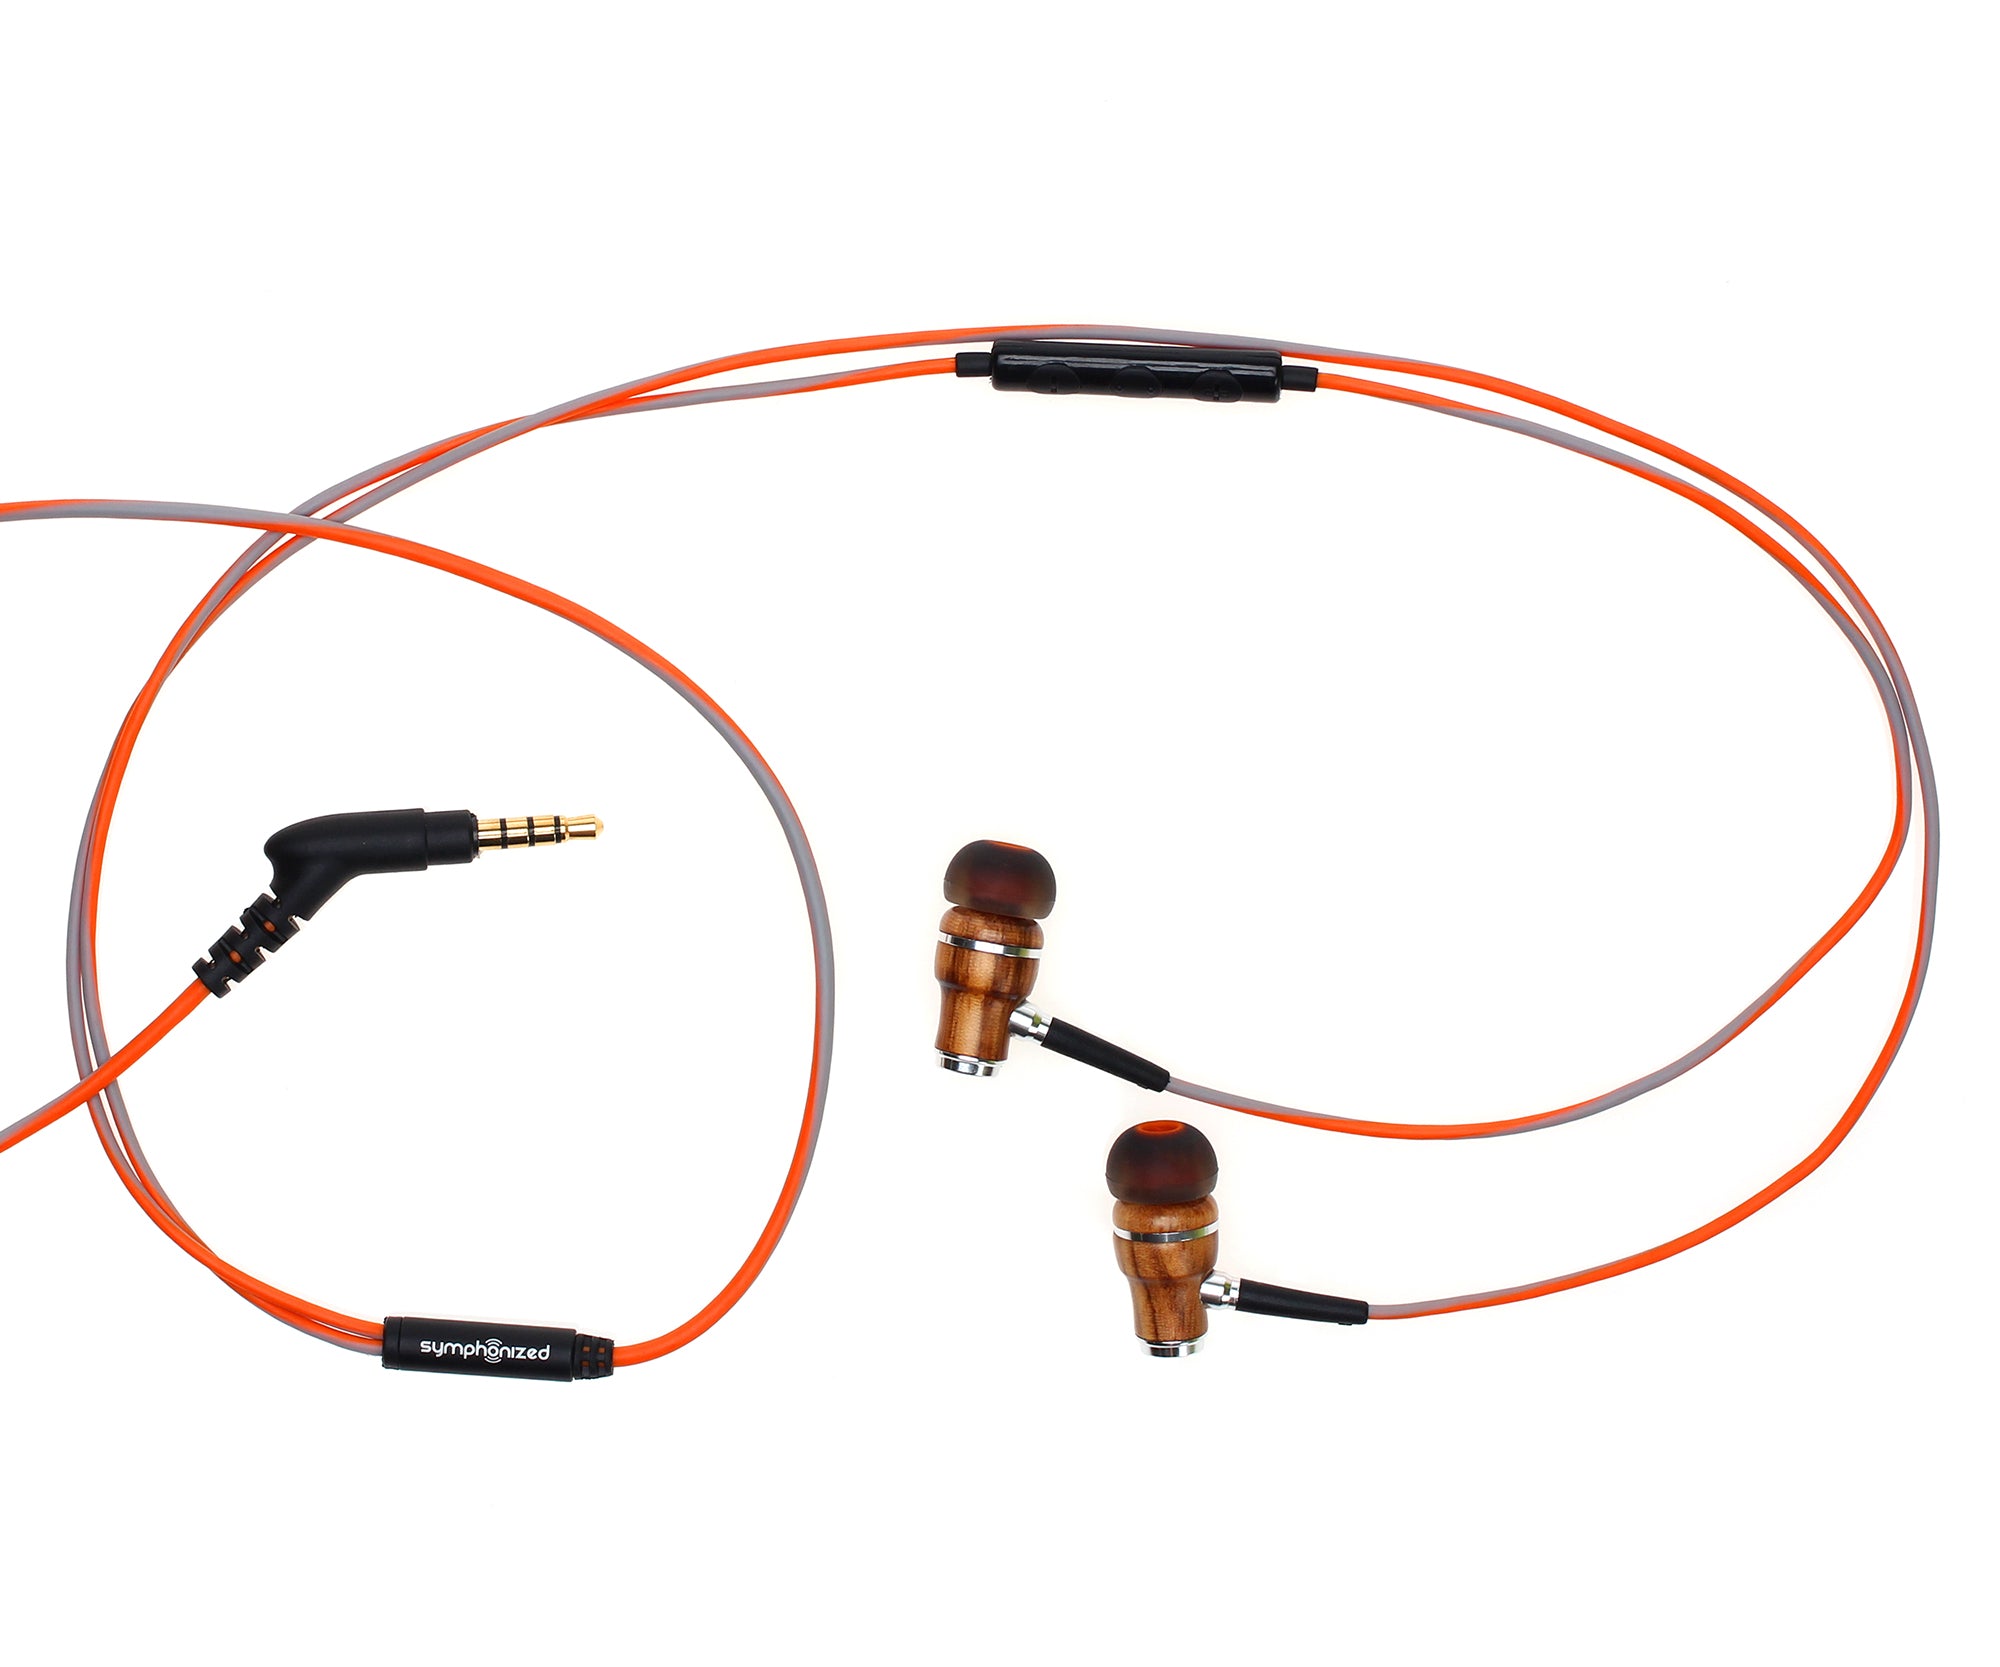 NRG 3.0 In-Ear Wood Headphones - Orange and Gray – Symphonized